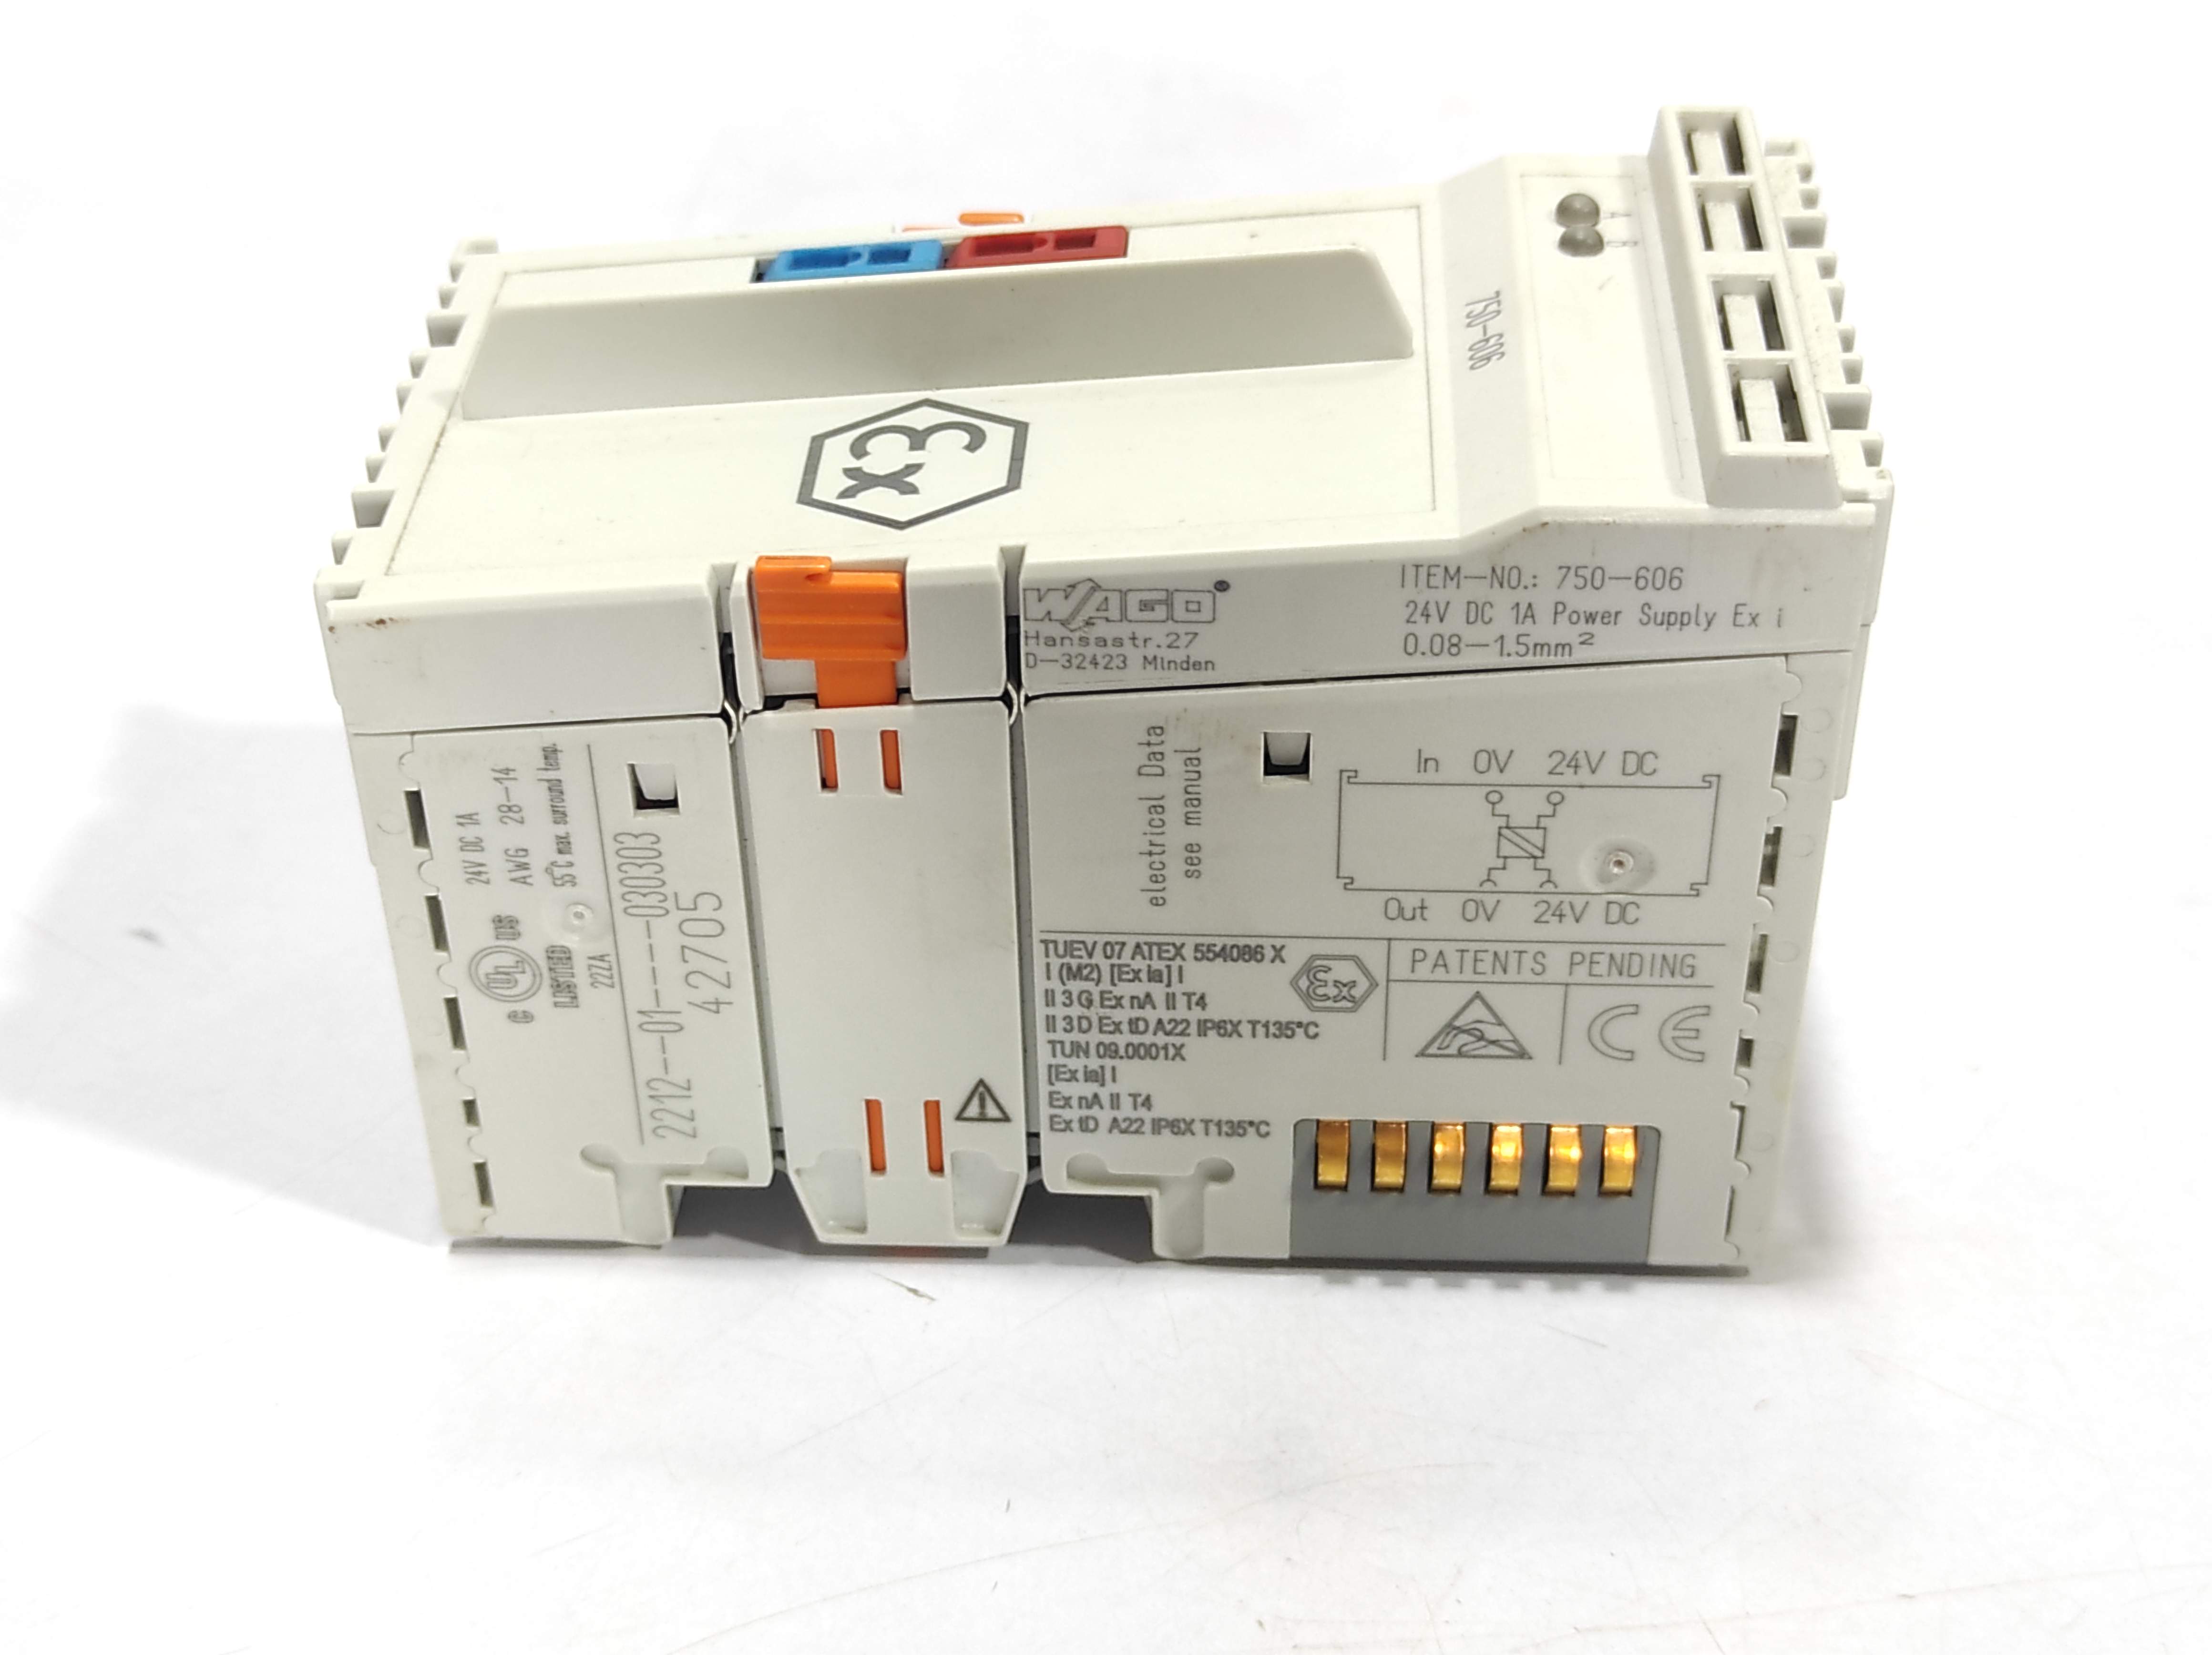 Wago 750-606 Power Supply Module